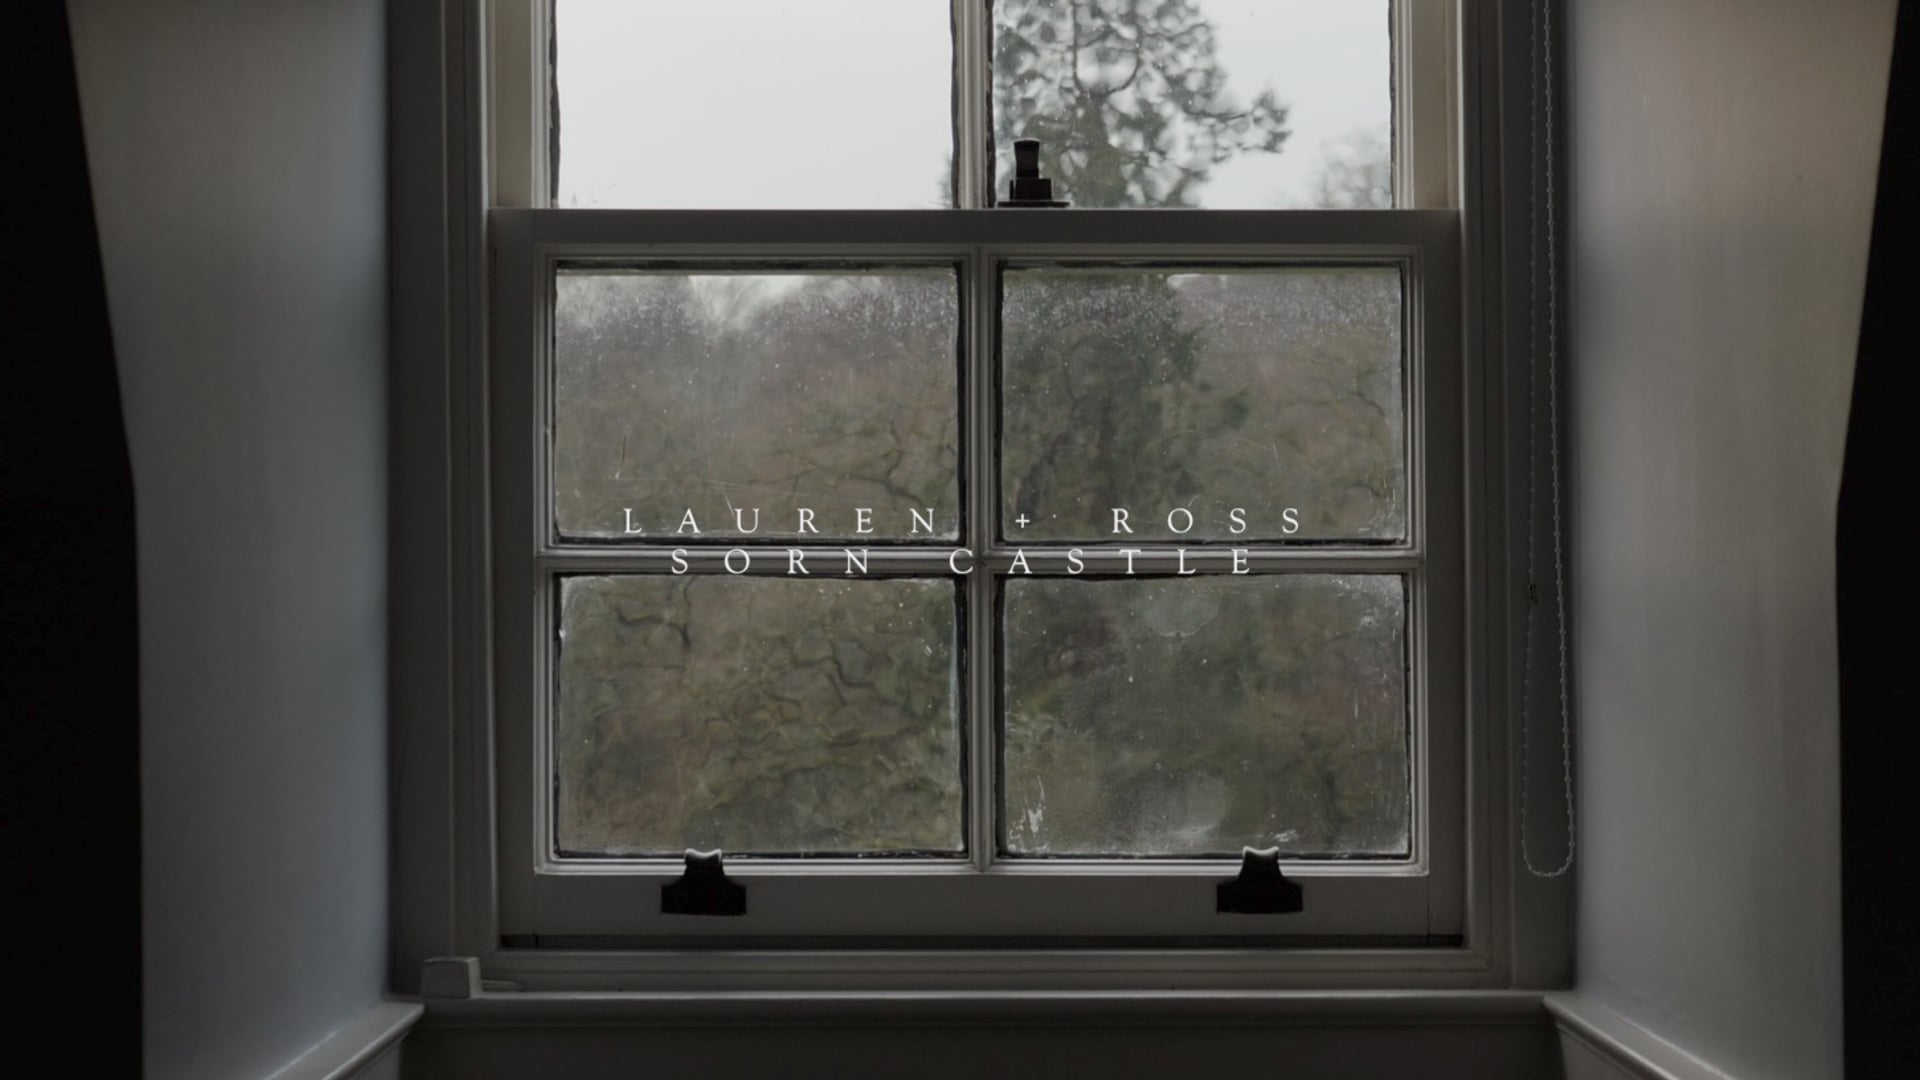 Lauren + Ross / Sorn Castle, Ayrshire